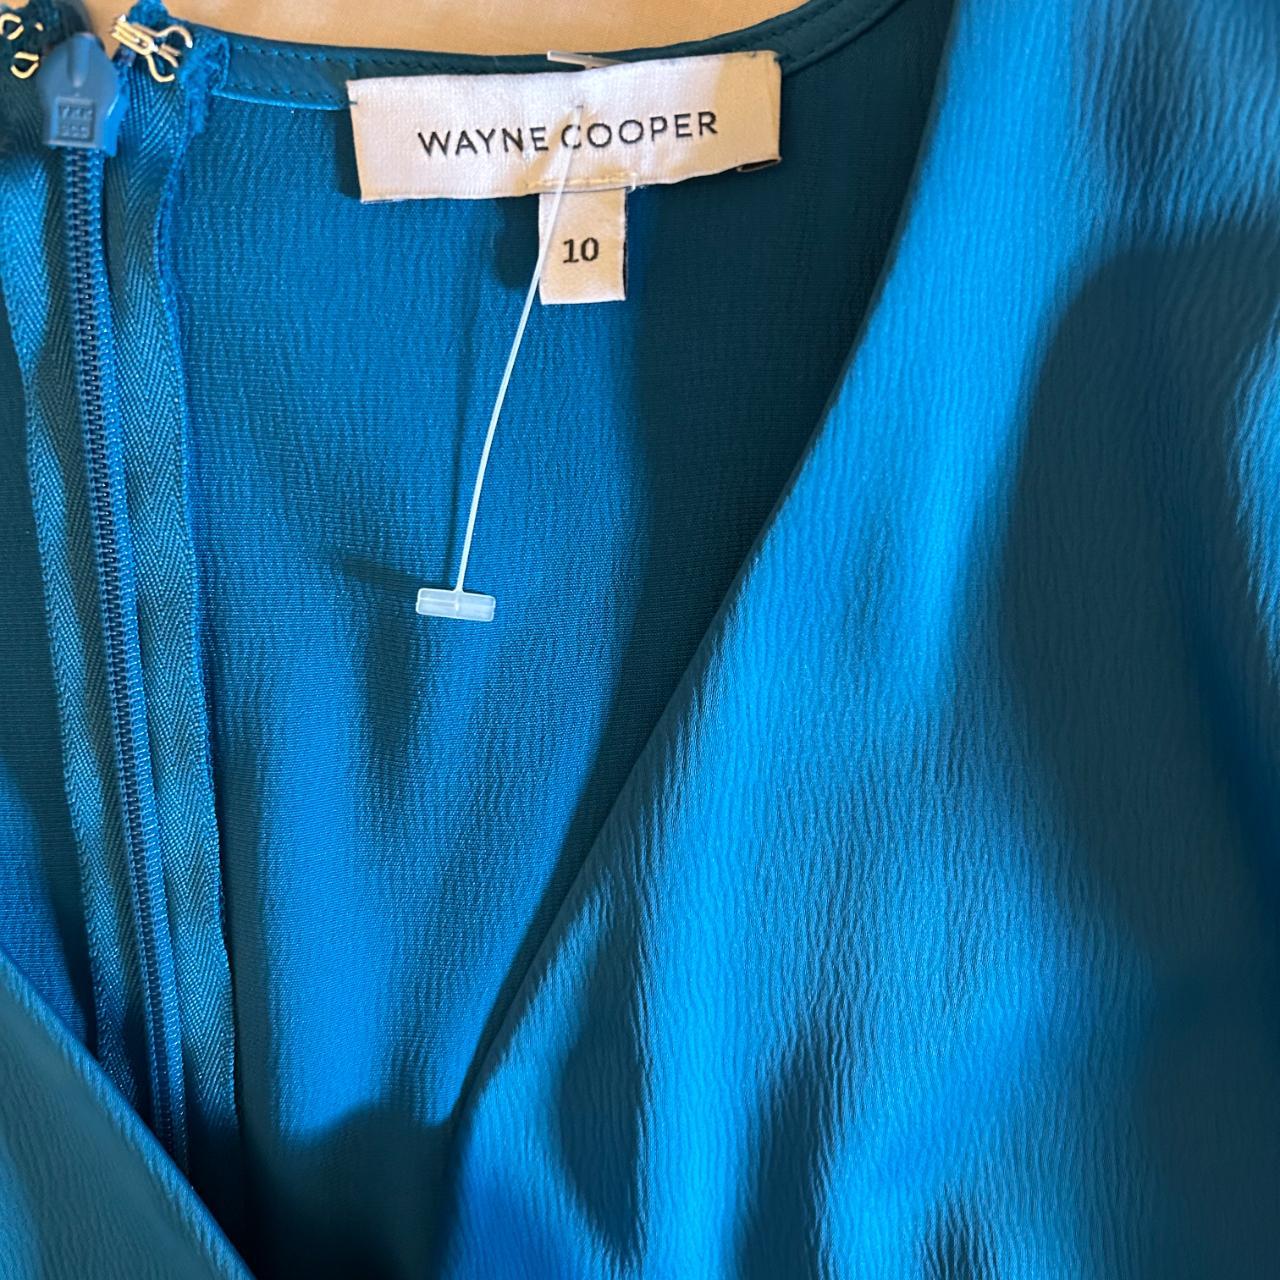 A gorgeous Wayne Cooper dress in teal/peacock blue,... - Depop